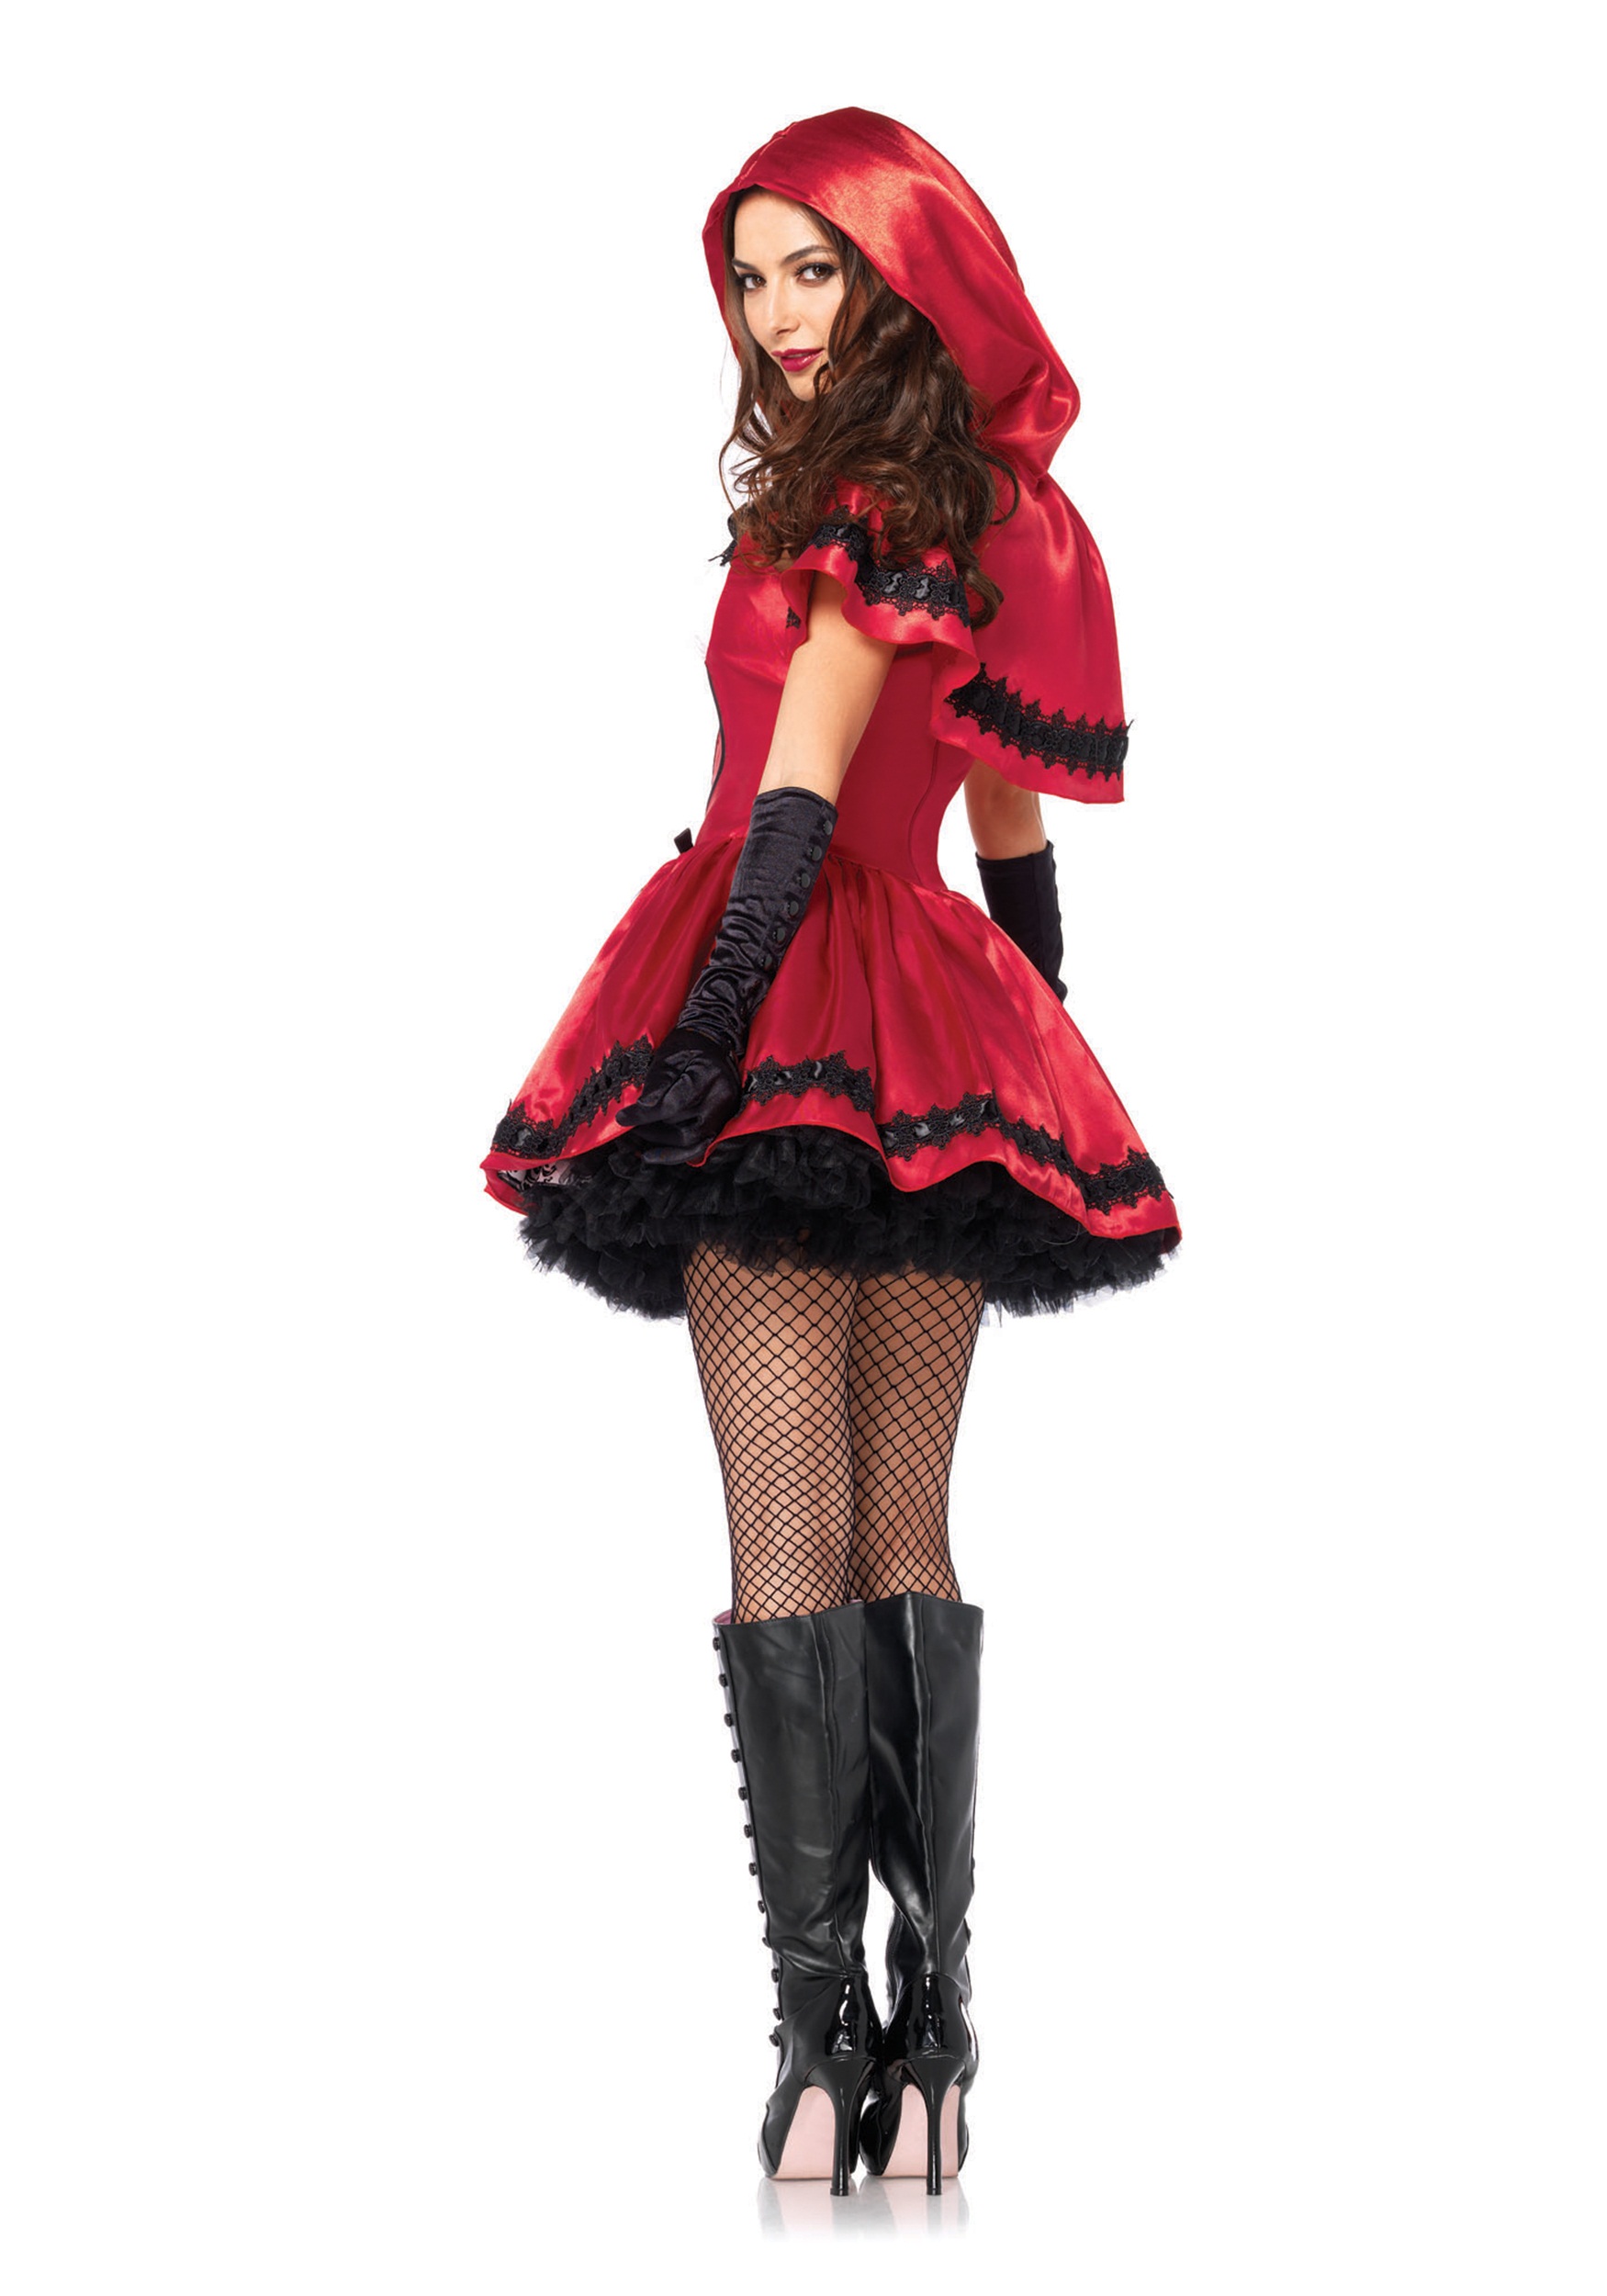 gothic-red-riding-hood-adult-costume-alt.jpg